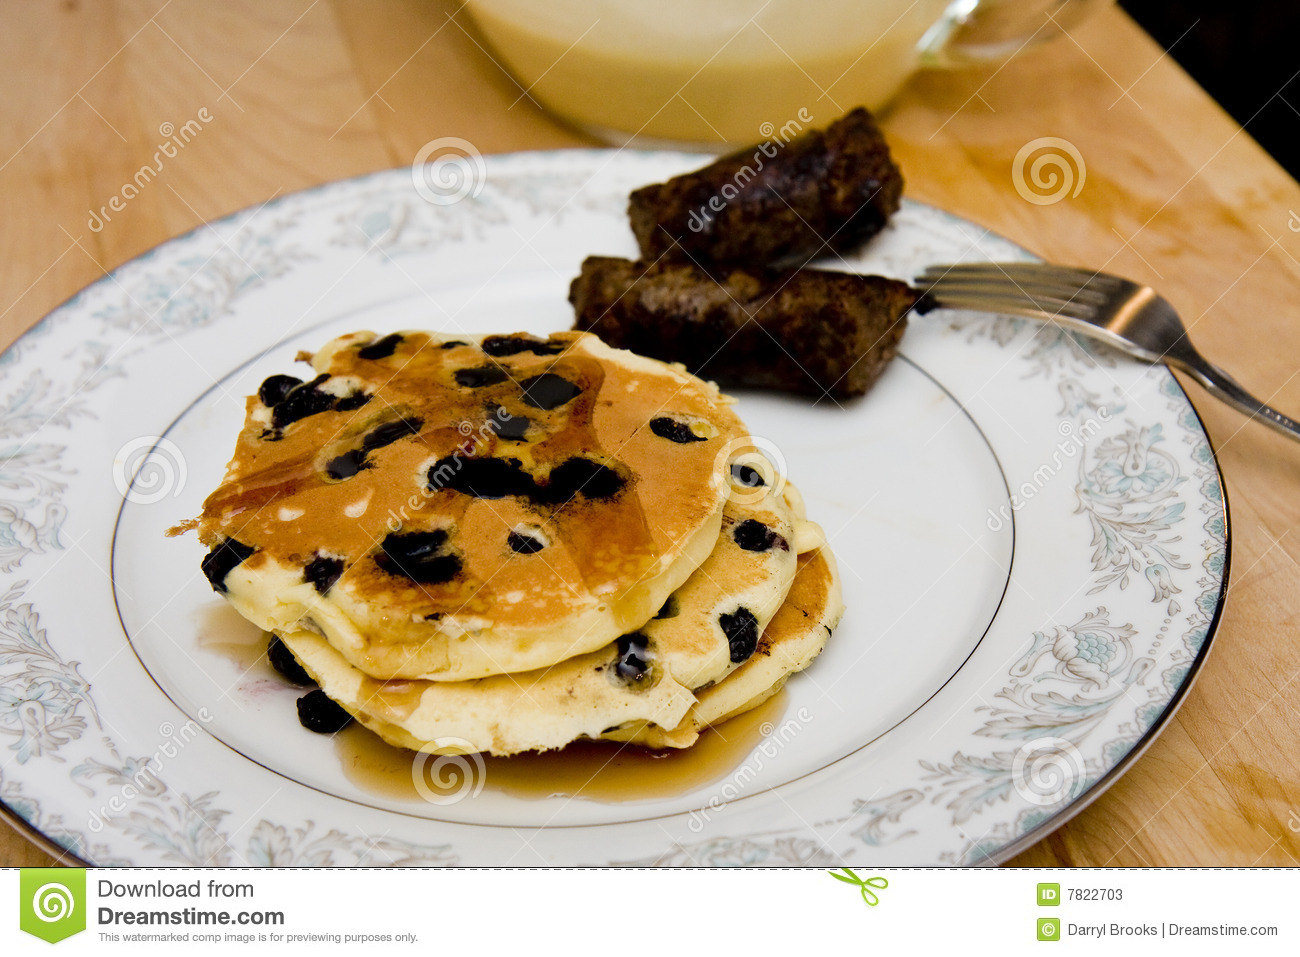 Blueberry Pancakes And Sausage Stock Photos   Image  7822703